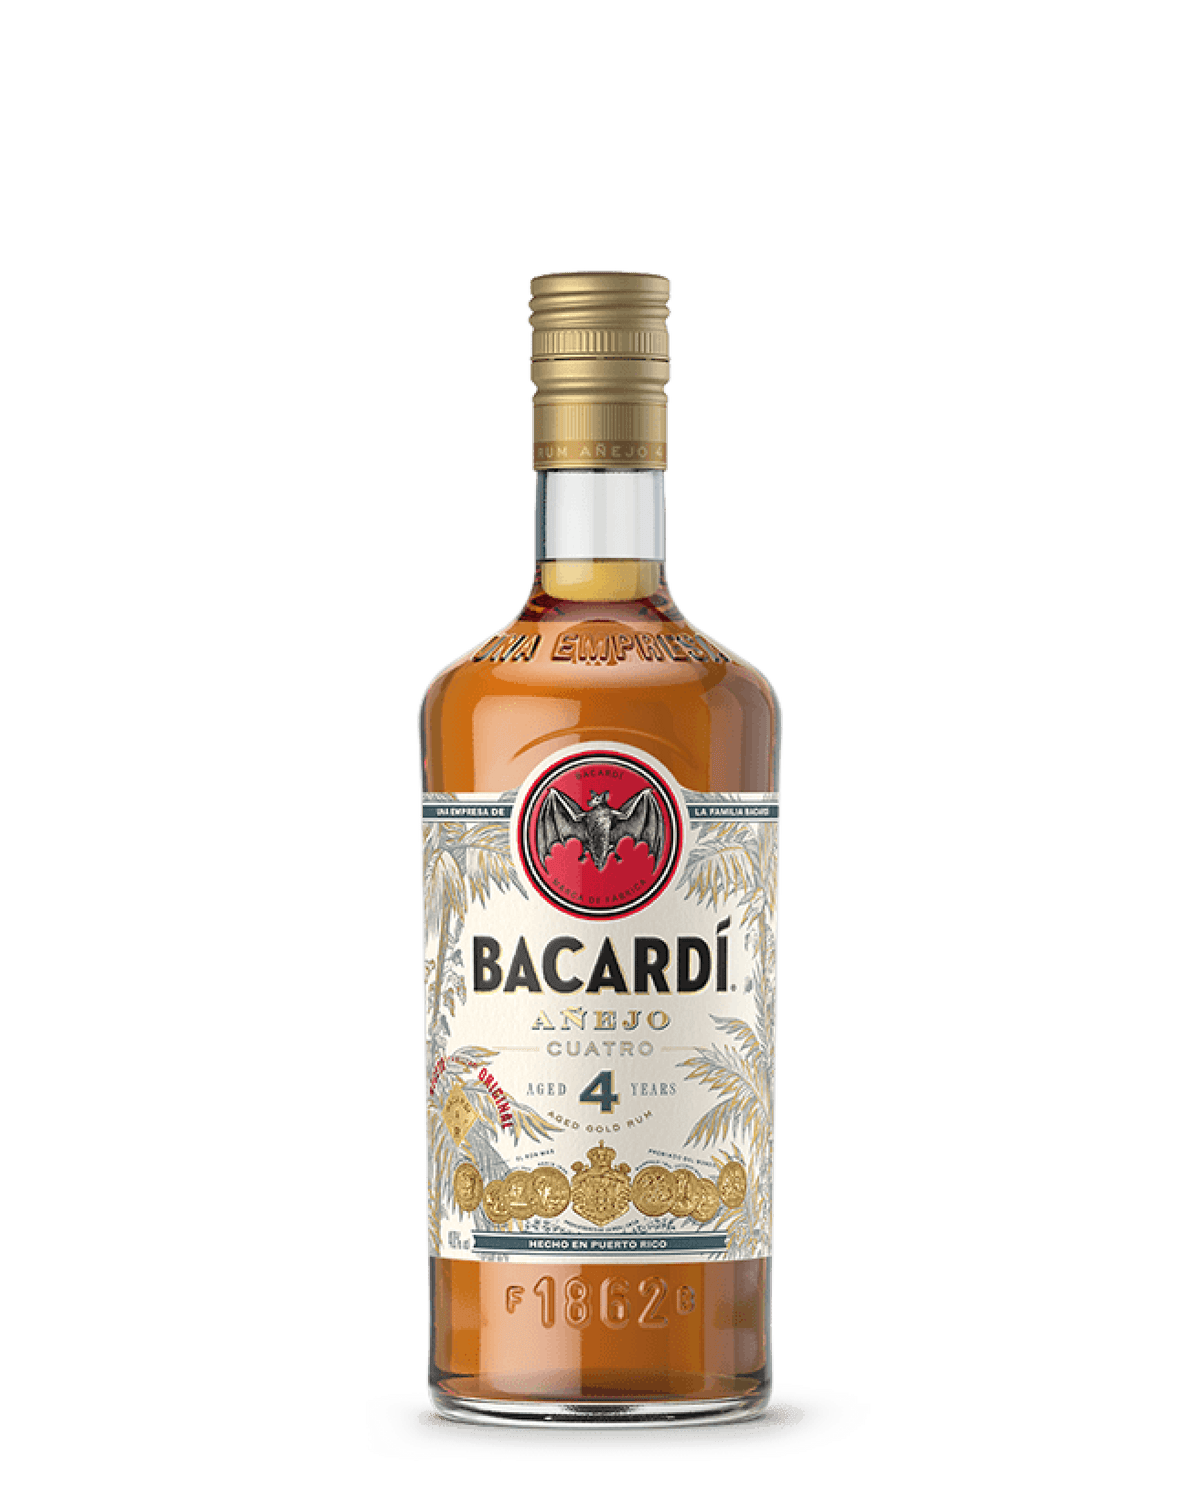 Bacardi Anejo Cuatro 4 Year Old Gold Rum